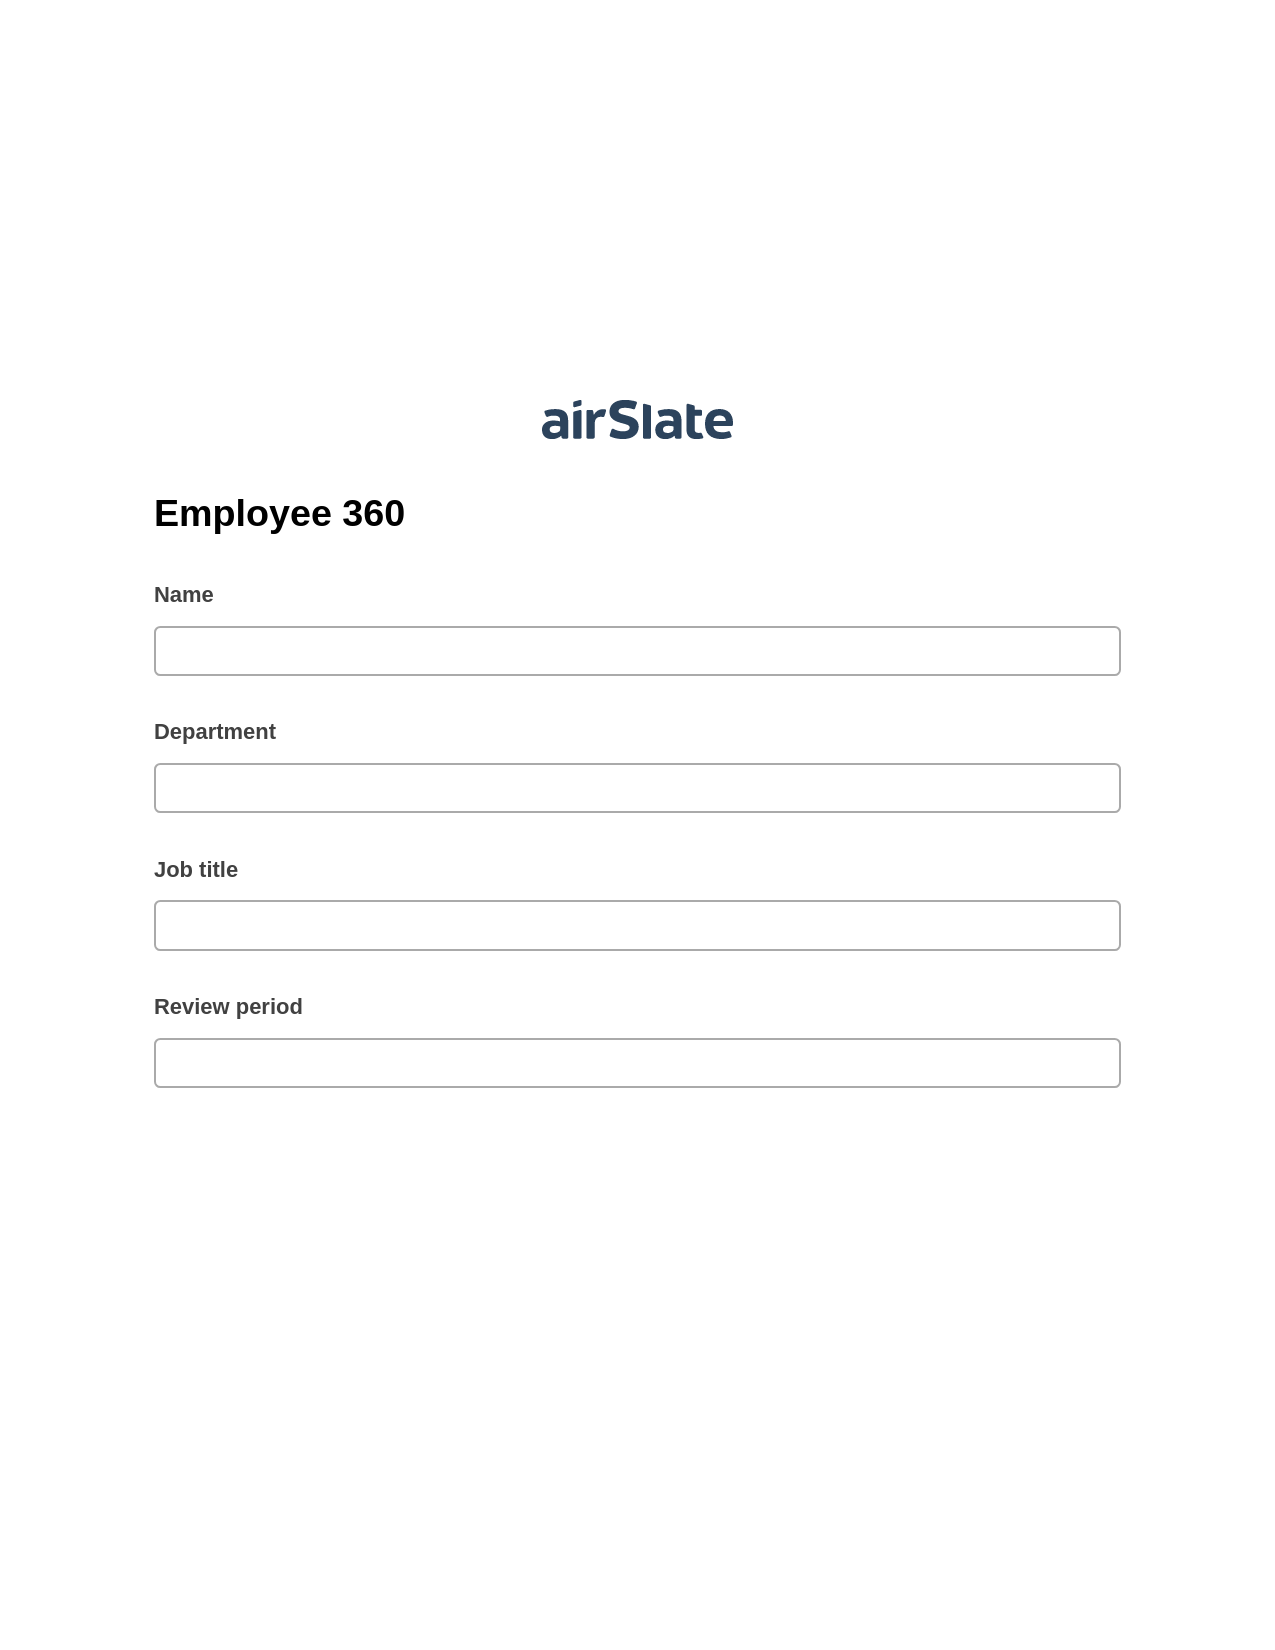 Multirole Employee 360 Pre-fill from Google Sheets Bot, Webhook Bot, Post-finish Document Bot